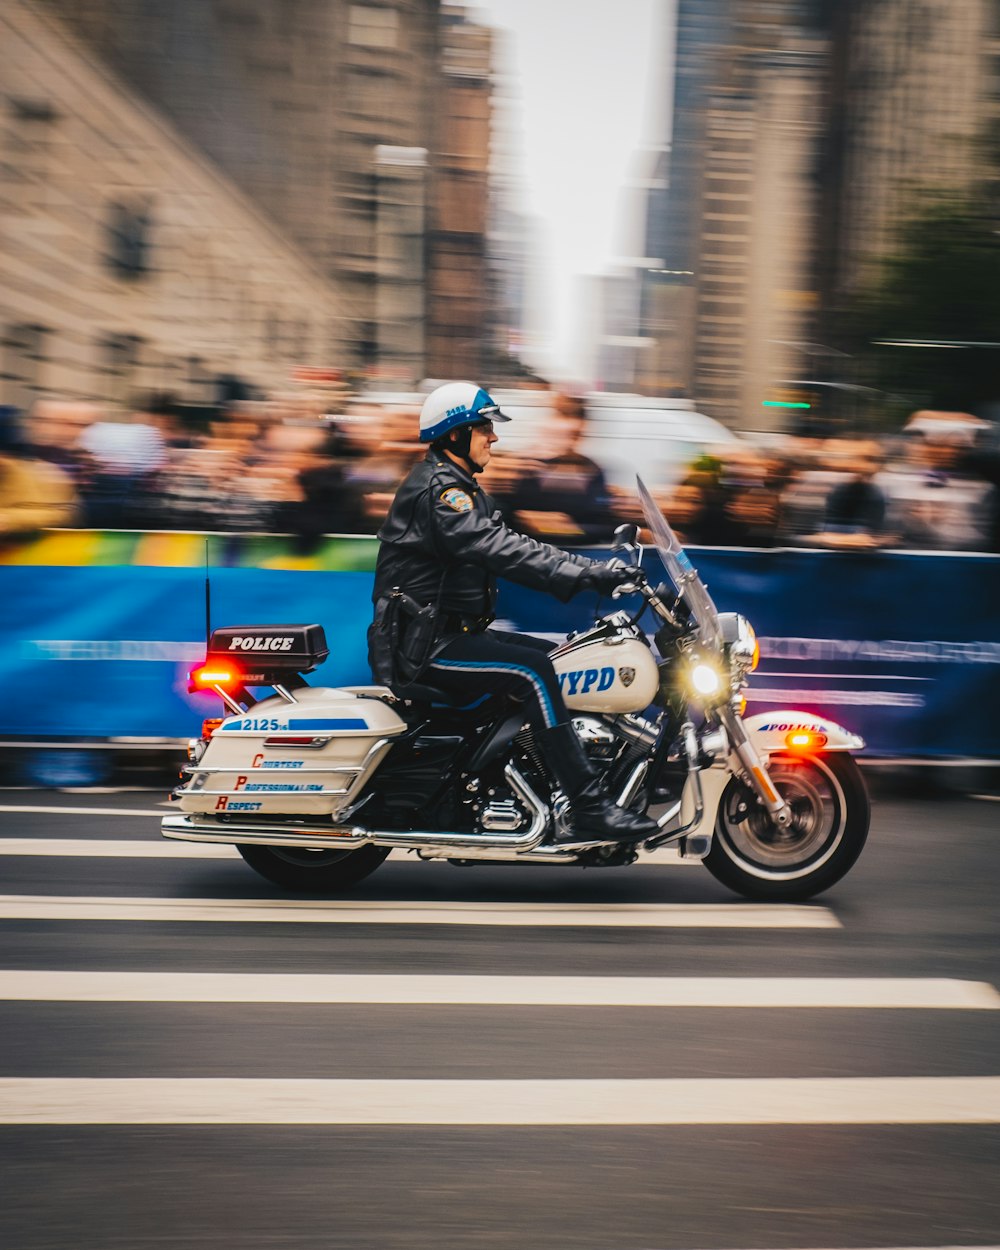 policeman riding on white motorcycle